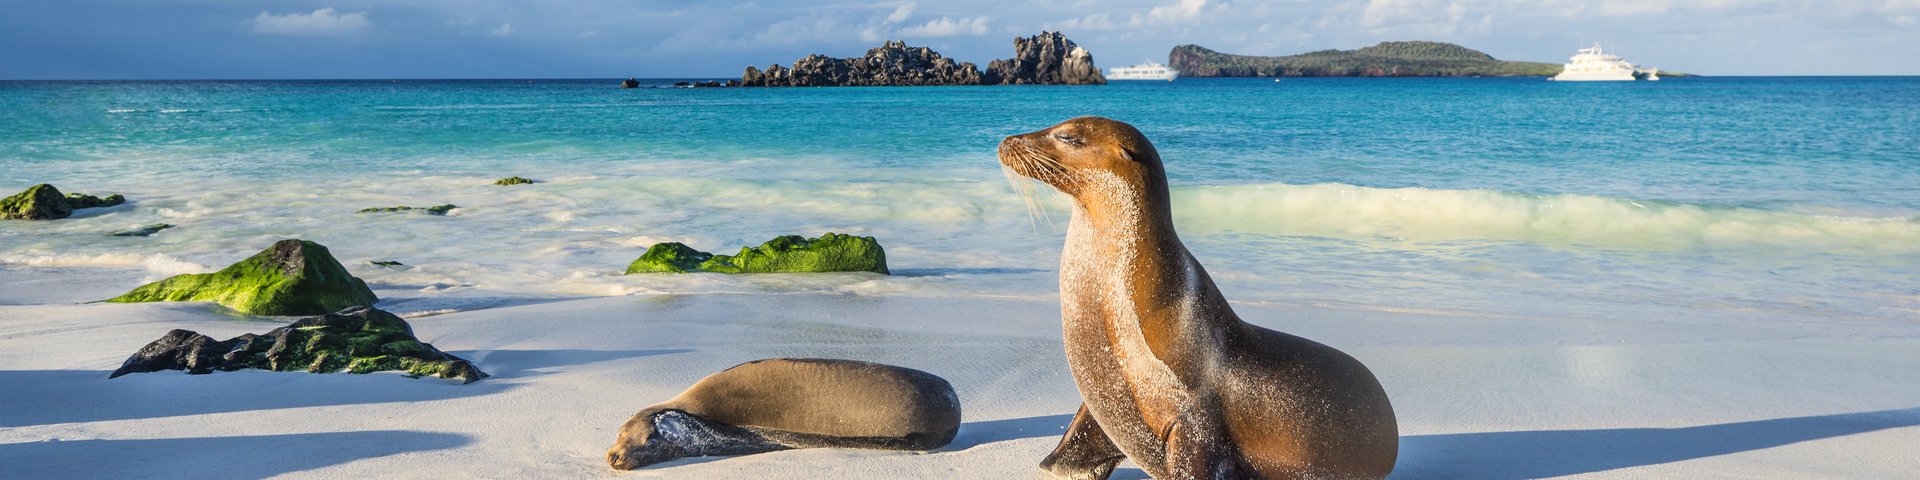 Traumstrand mit Seelöwe auf Galapagos